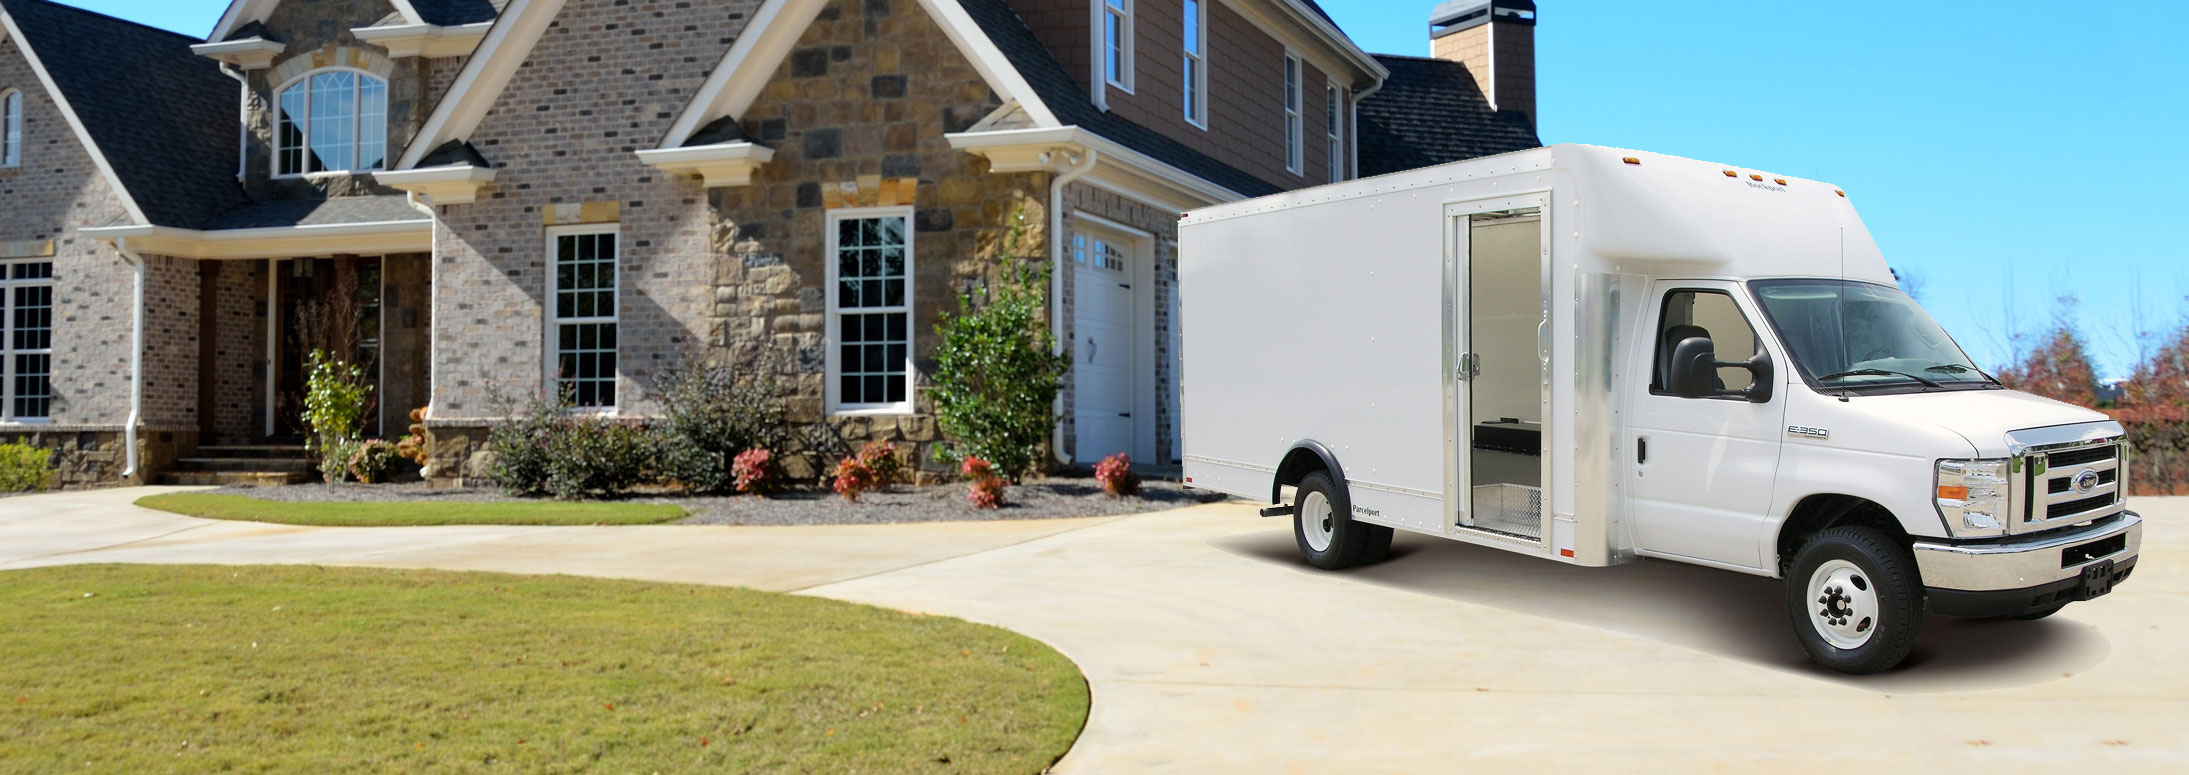 customizd box truck in home driveway